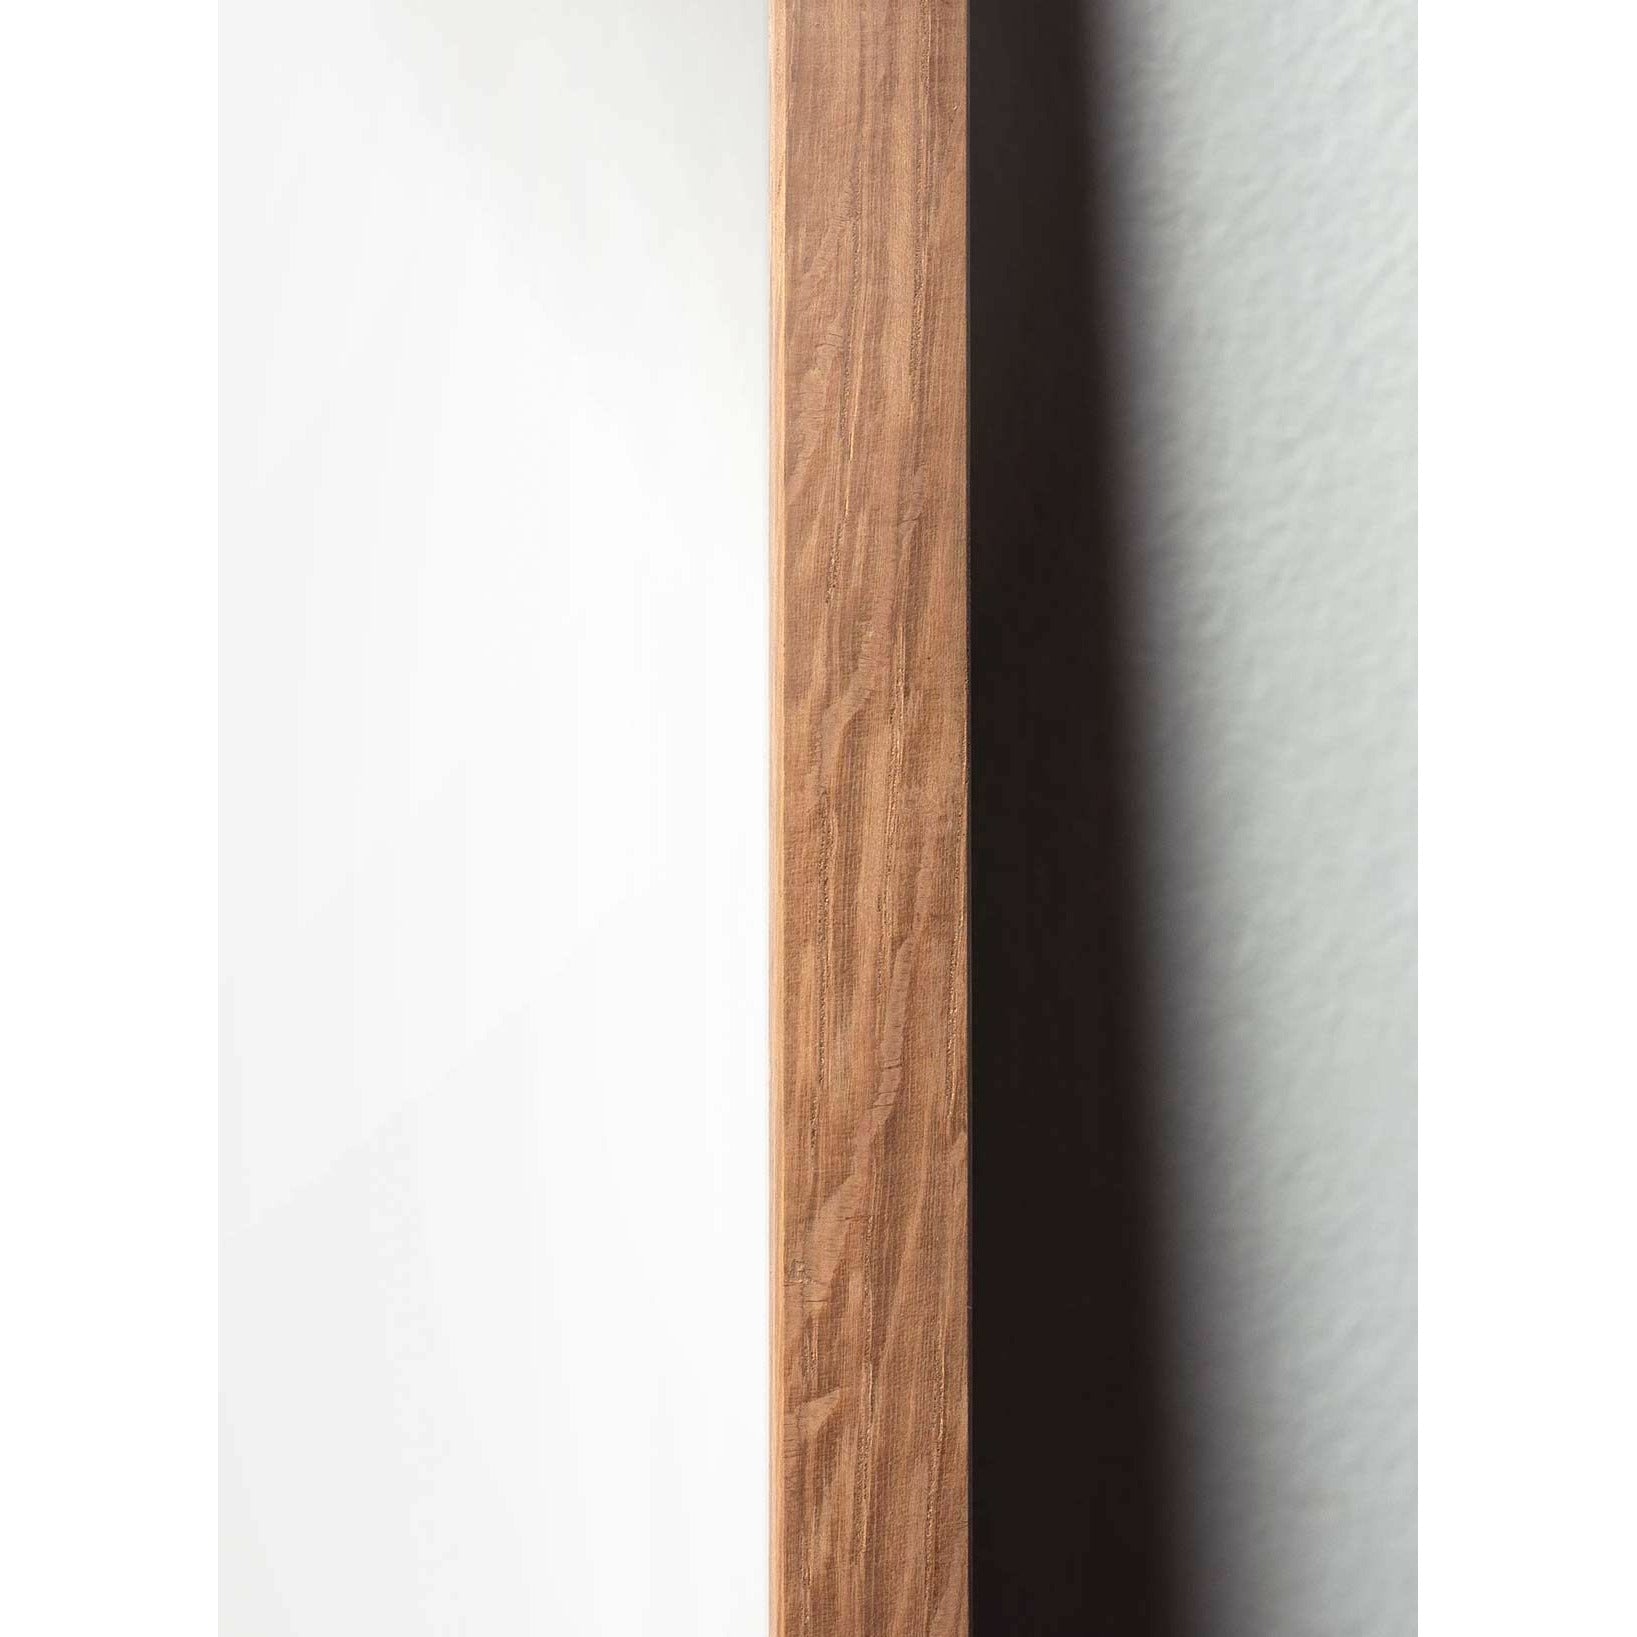 Póster de línea de caída de creación, marco hecho de madera clara de 70x100 cm, fondo blanco